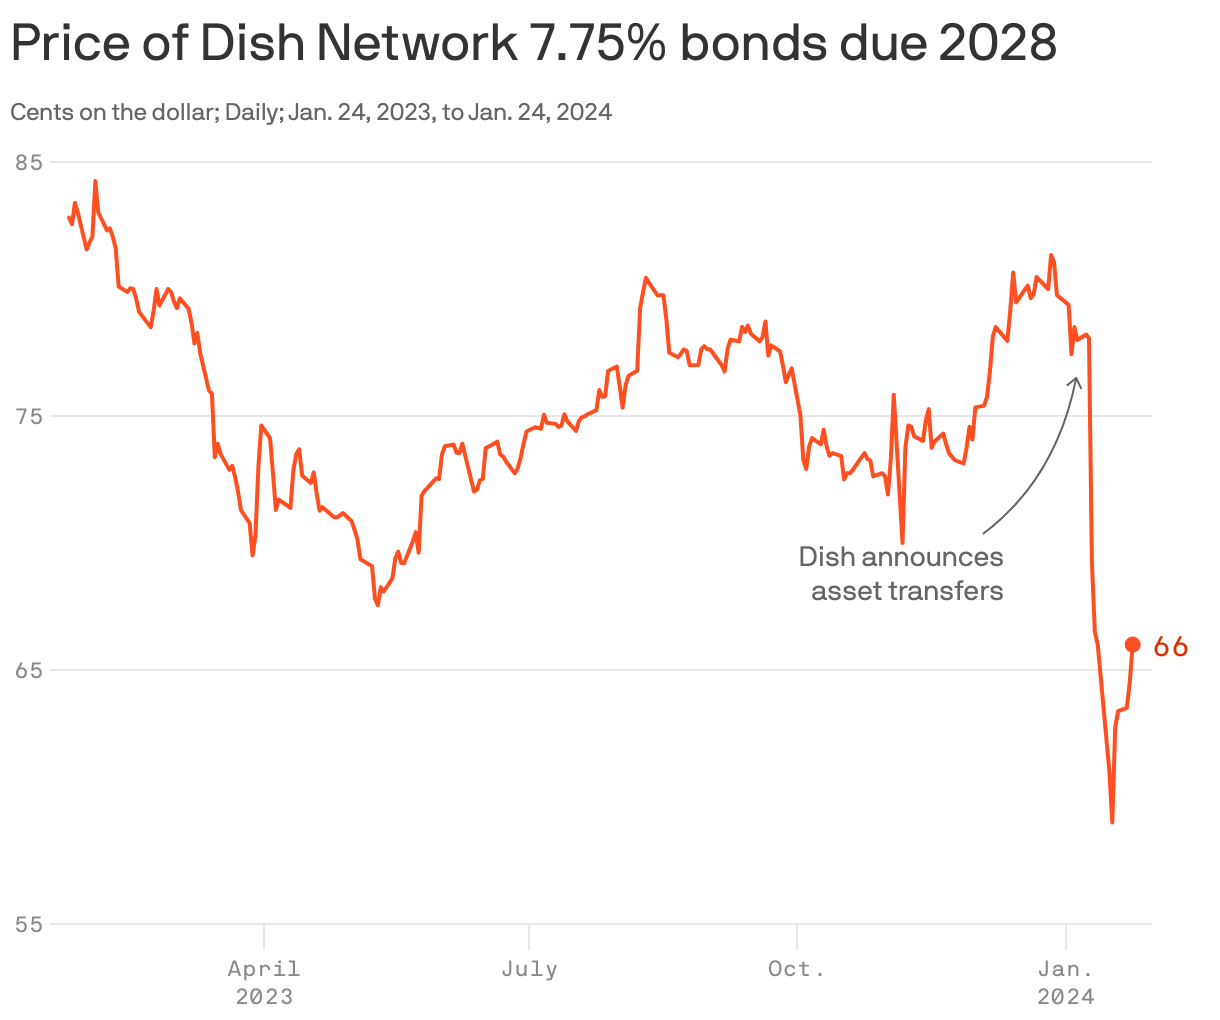 Price of Dish Network 7.75% bonds due 2028